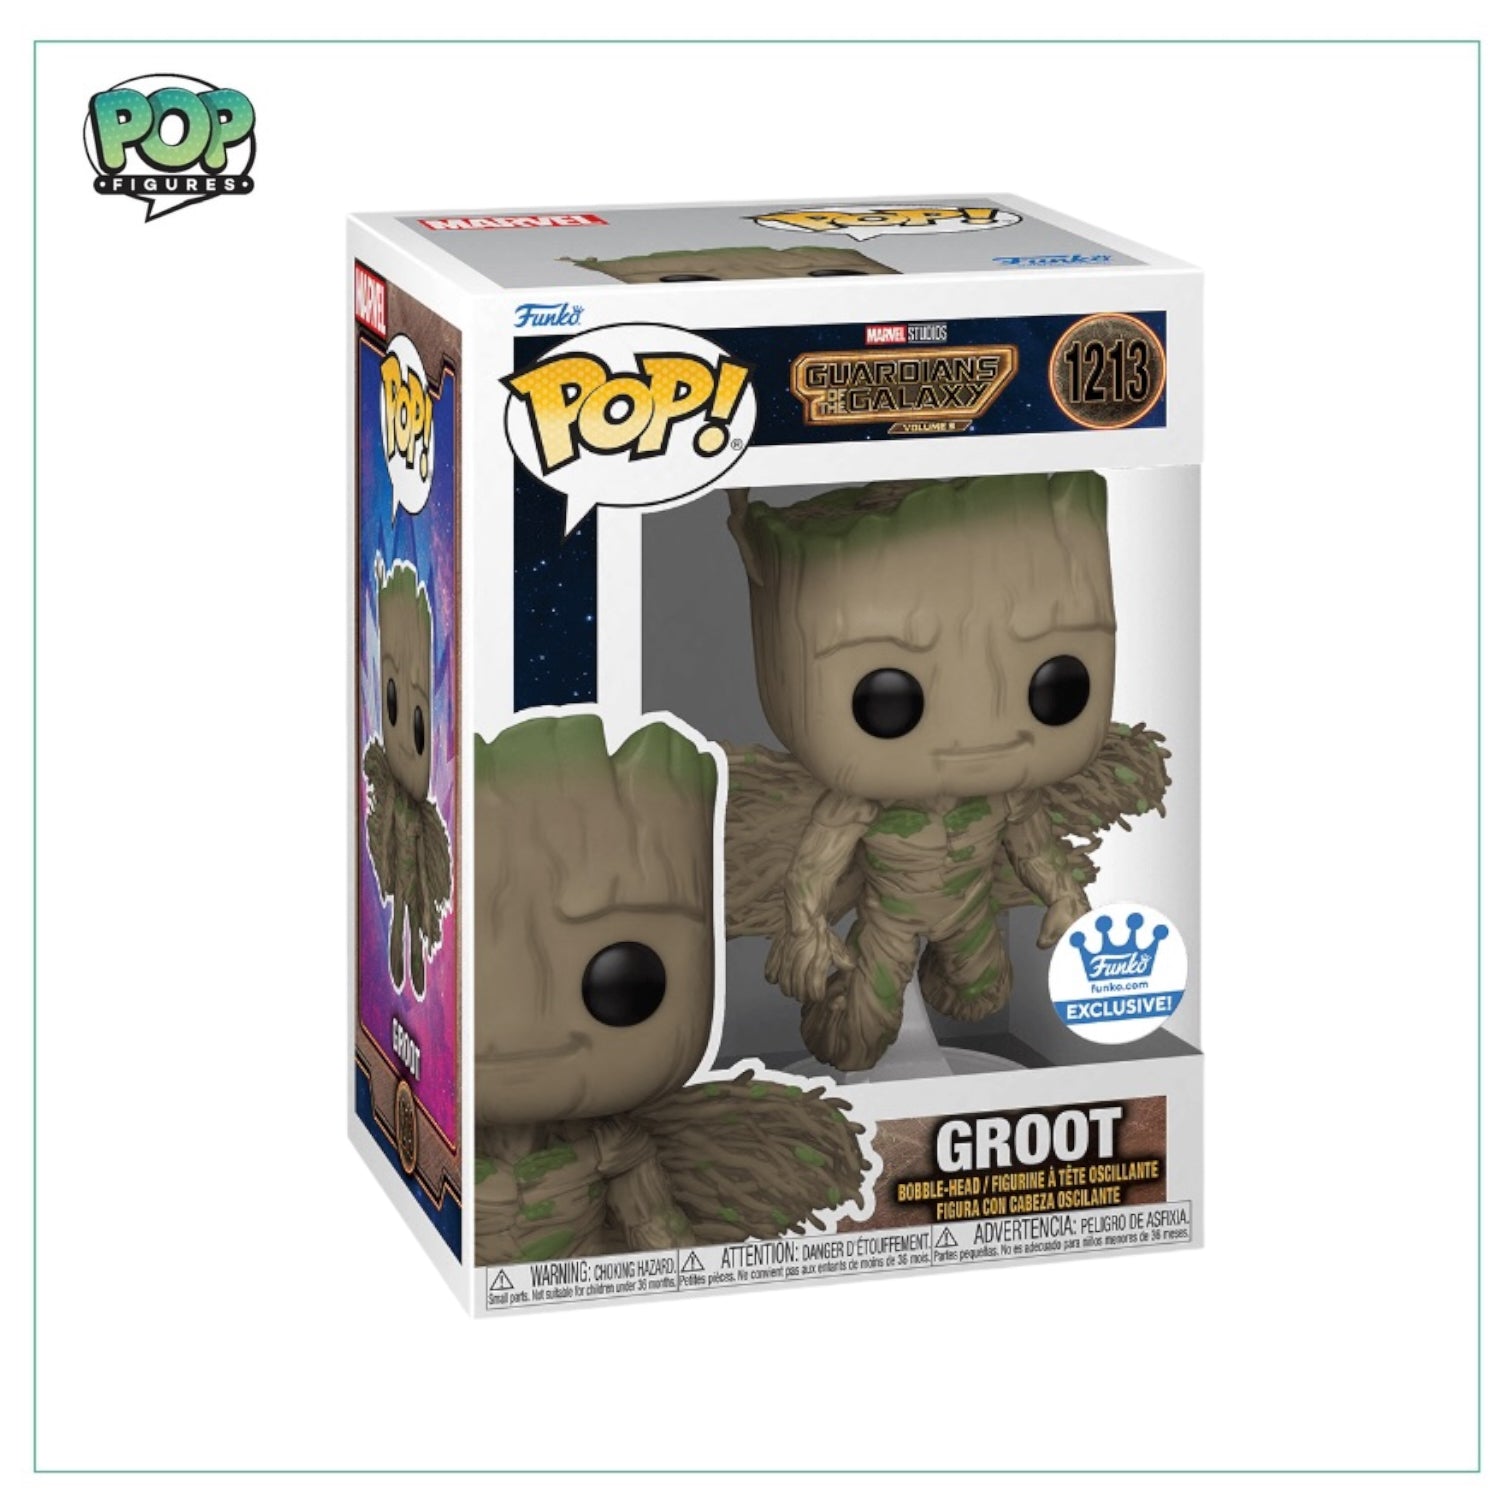 Groot #1213 (w/ Wings) Funko Pop! - Guardians of the Galaxy Volume 3 